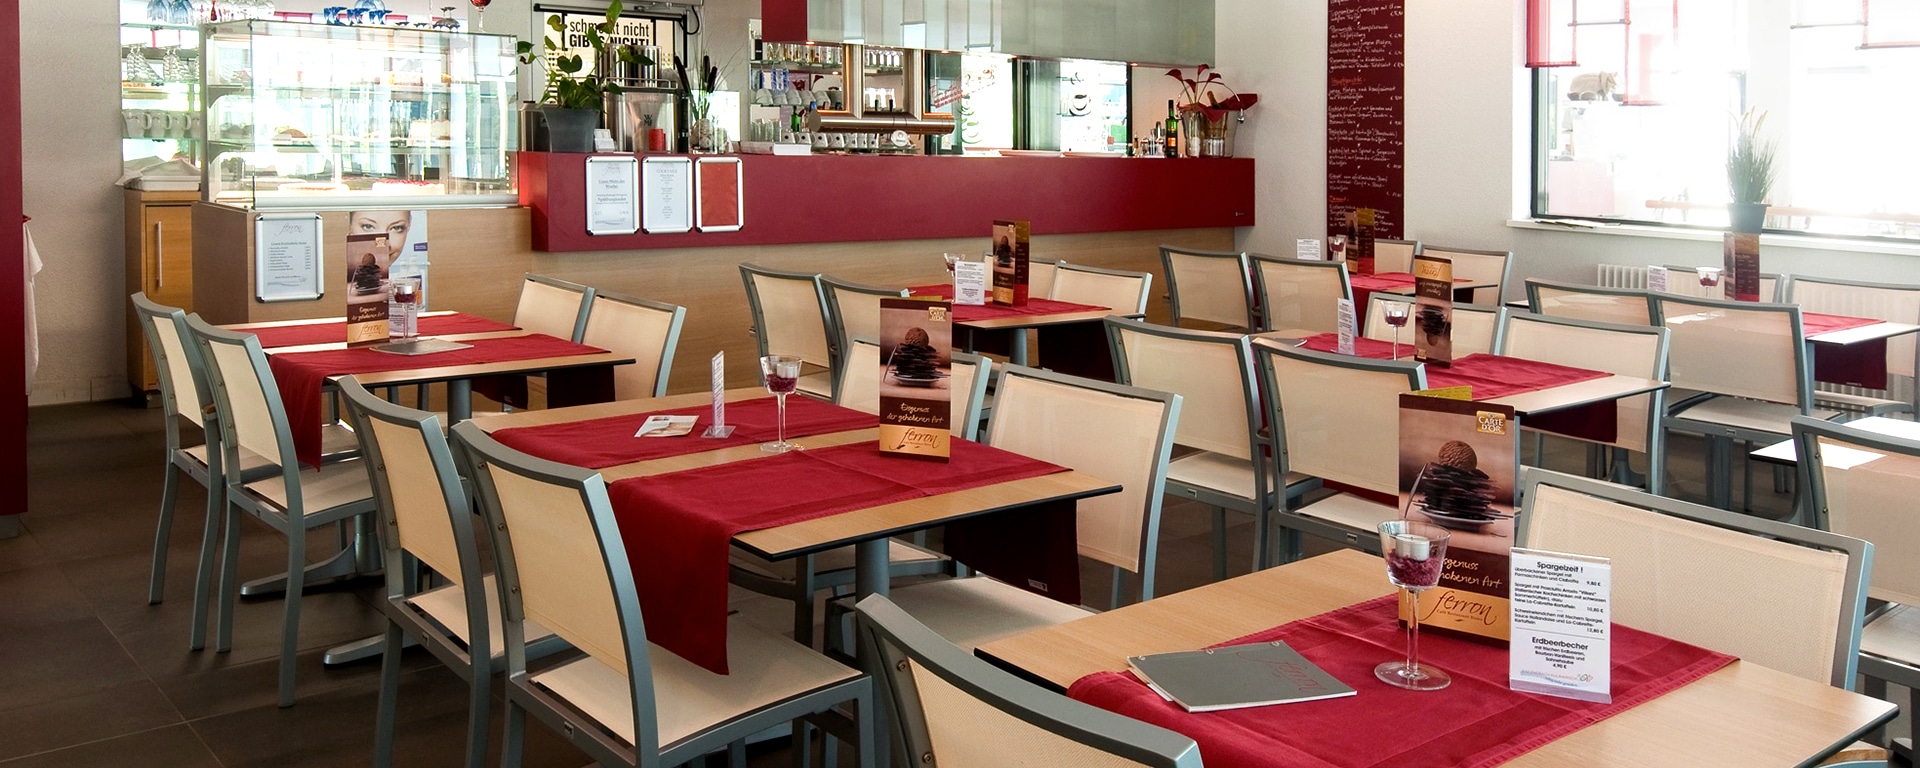 ferron Café Restaurant Bistro Lahn-Dill-Bergland-Therme Bad Endbach, Innenaufnahme